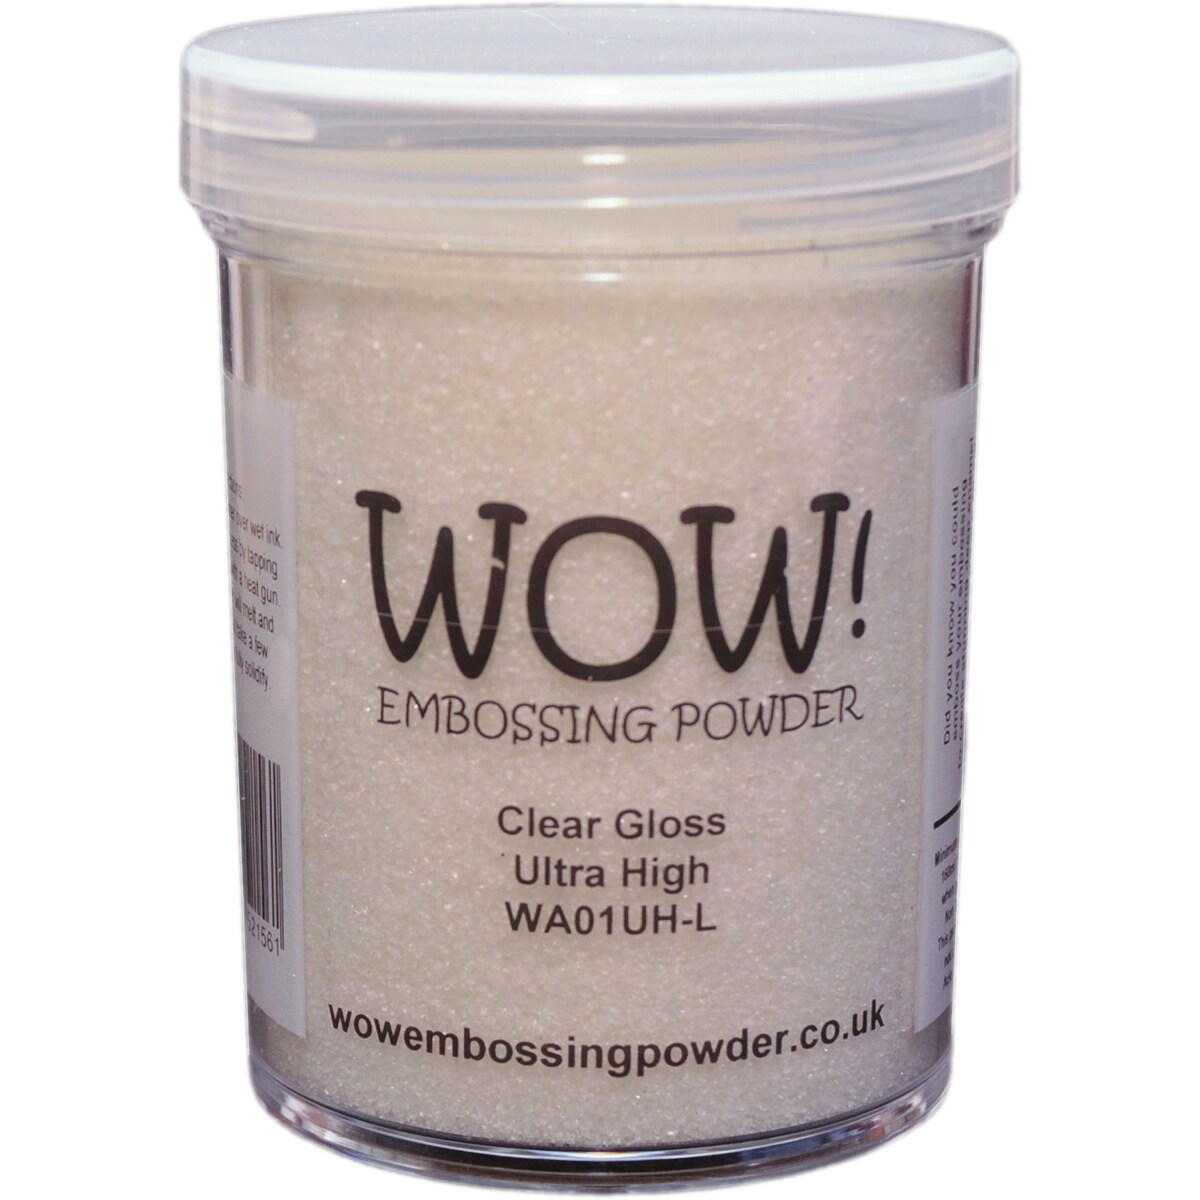 Wow! Embossing Powder 160Ml-Clear Gloss Ultra High